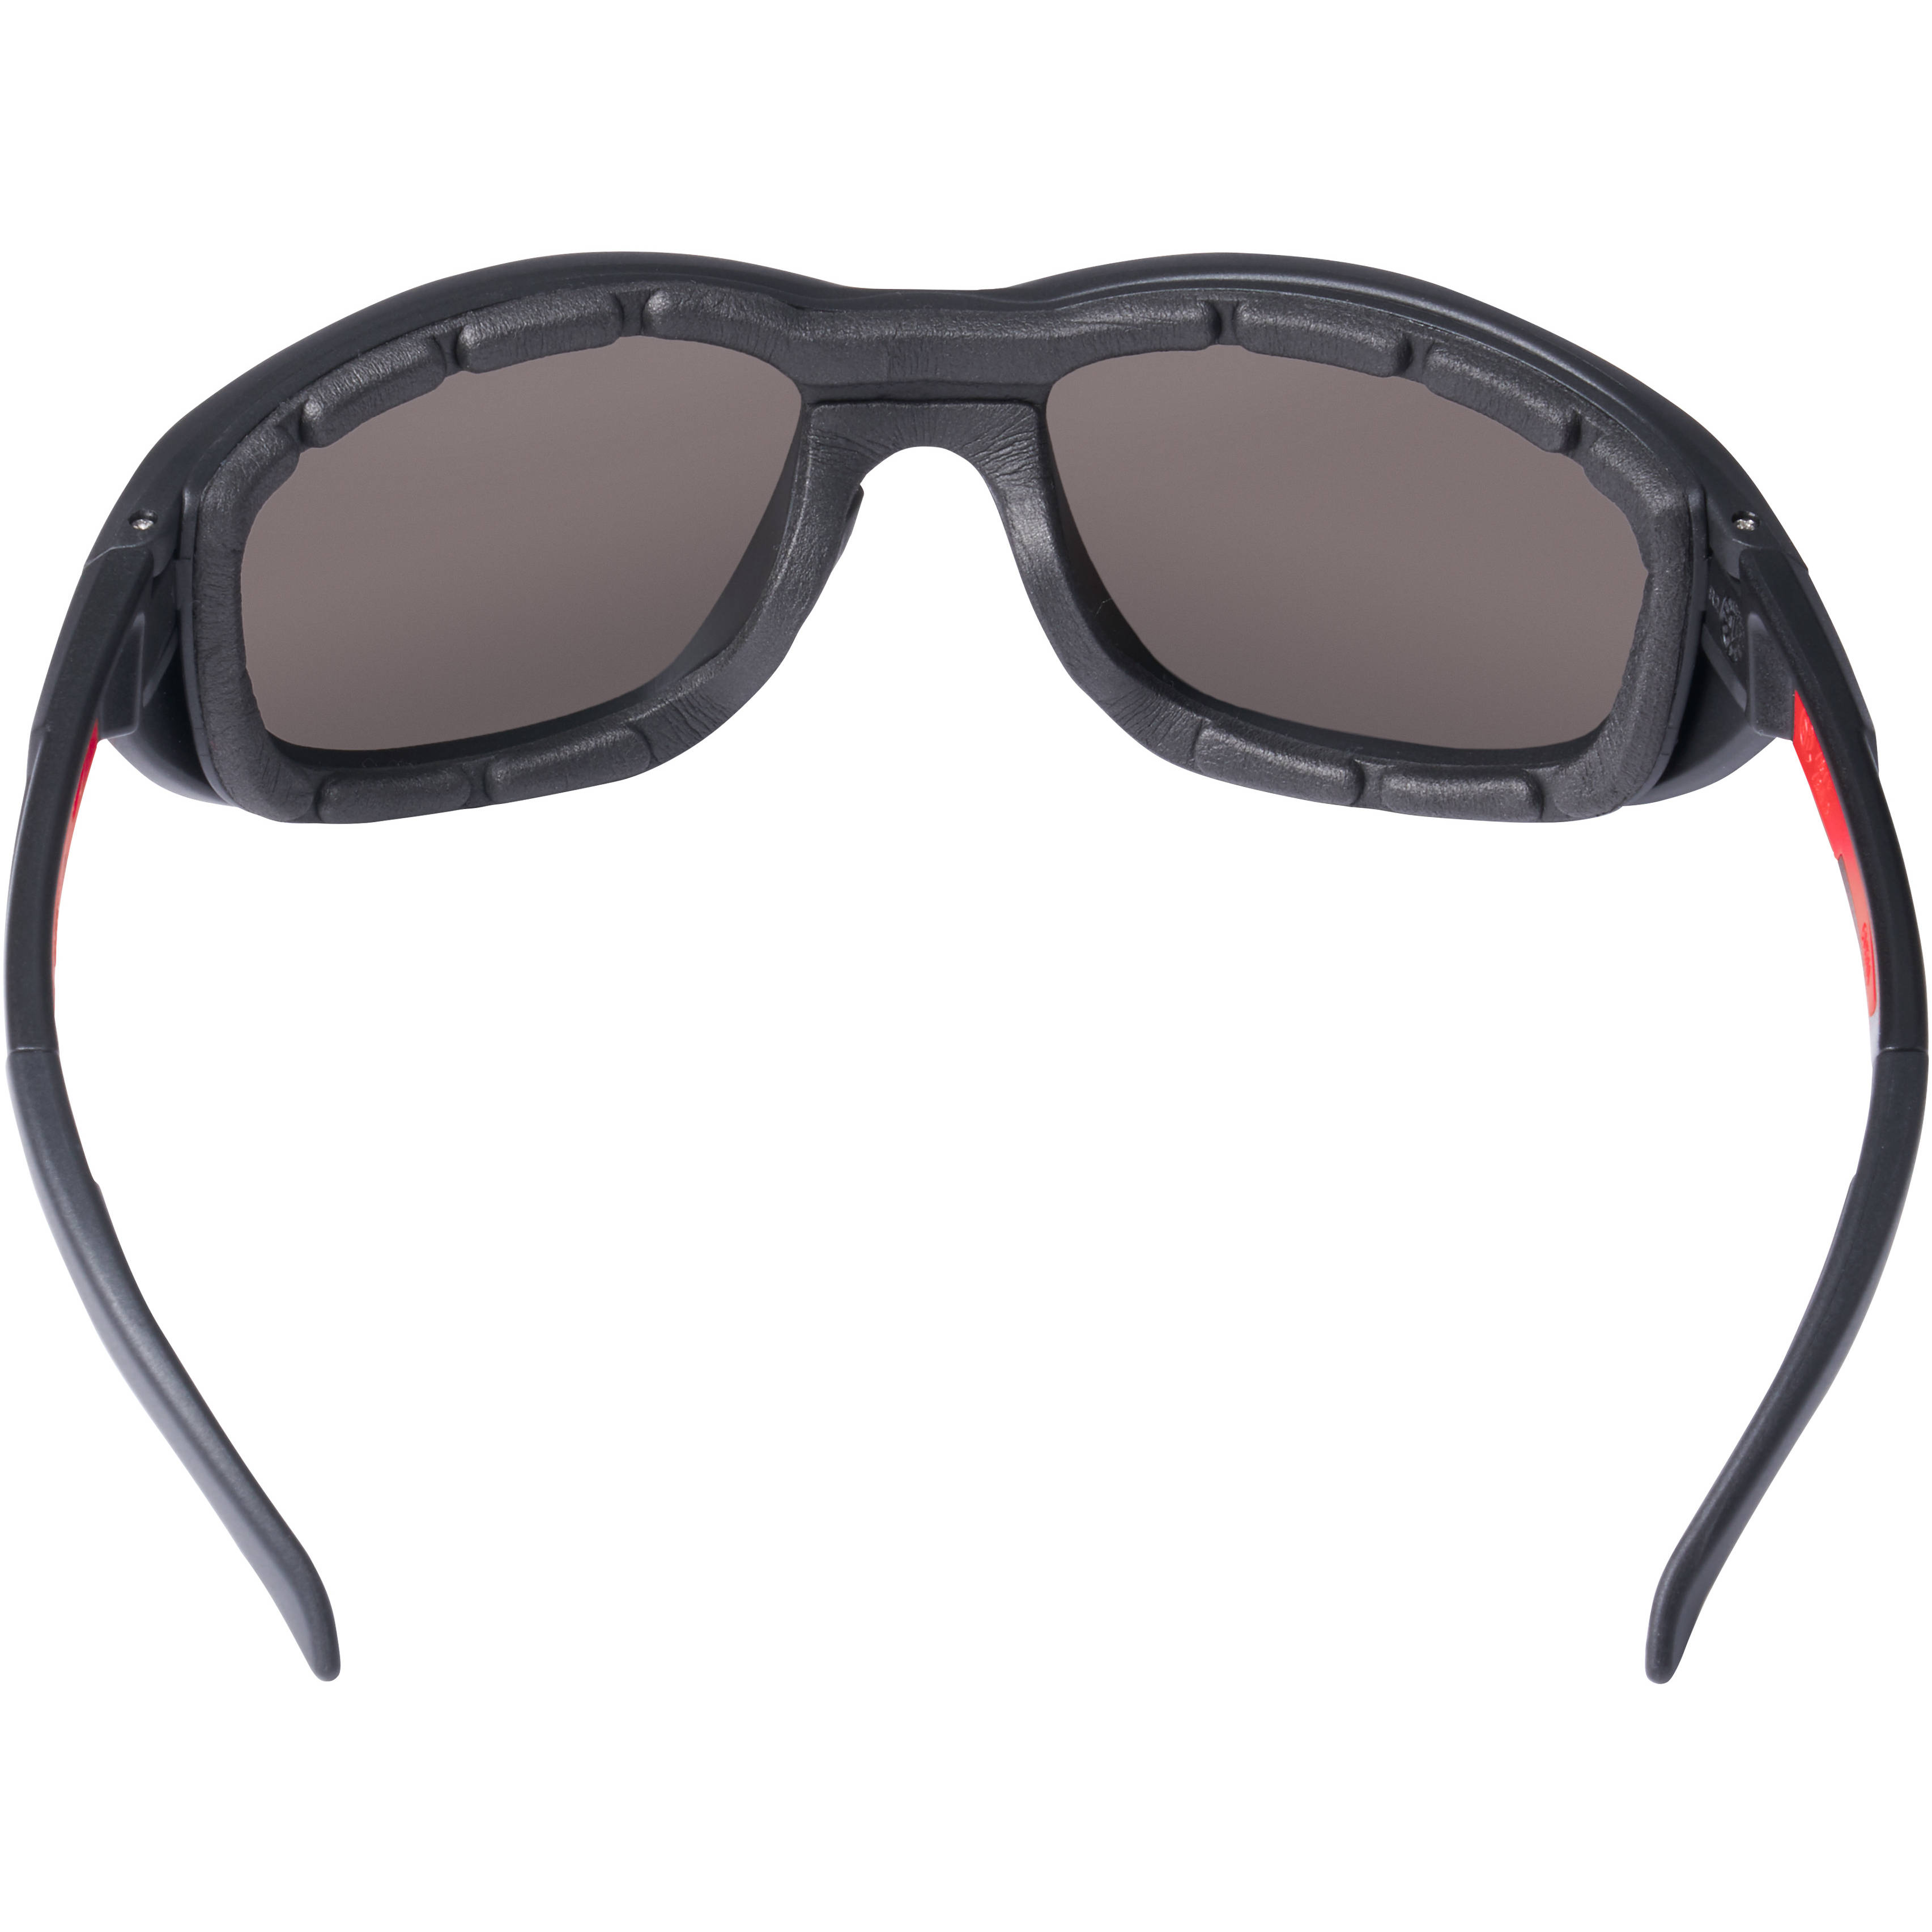 Performance Safety Glasses w/Gasket - Fog-Free Lenses 5